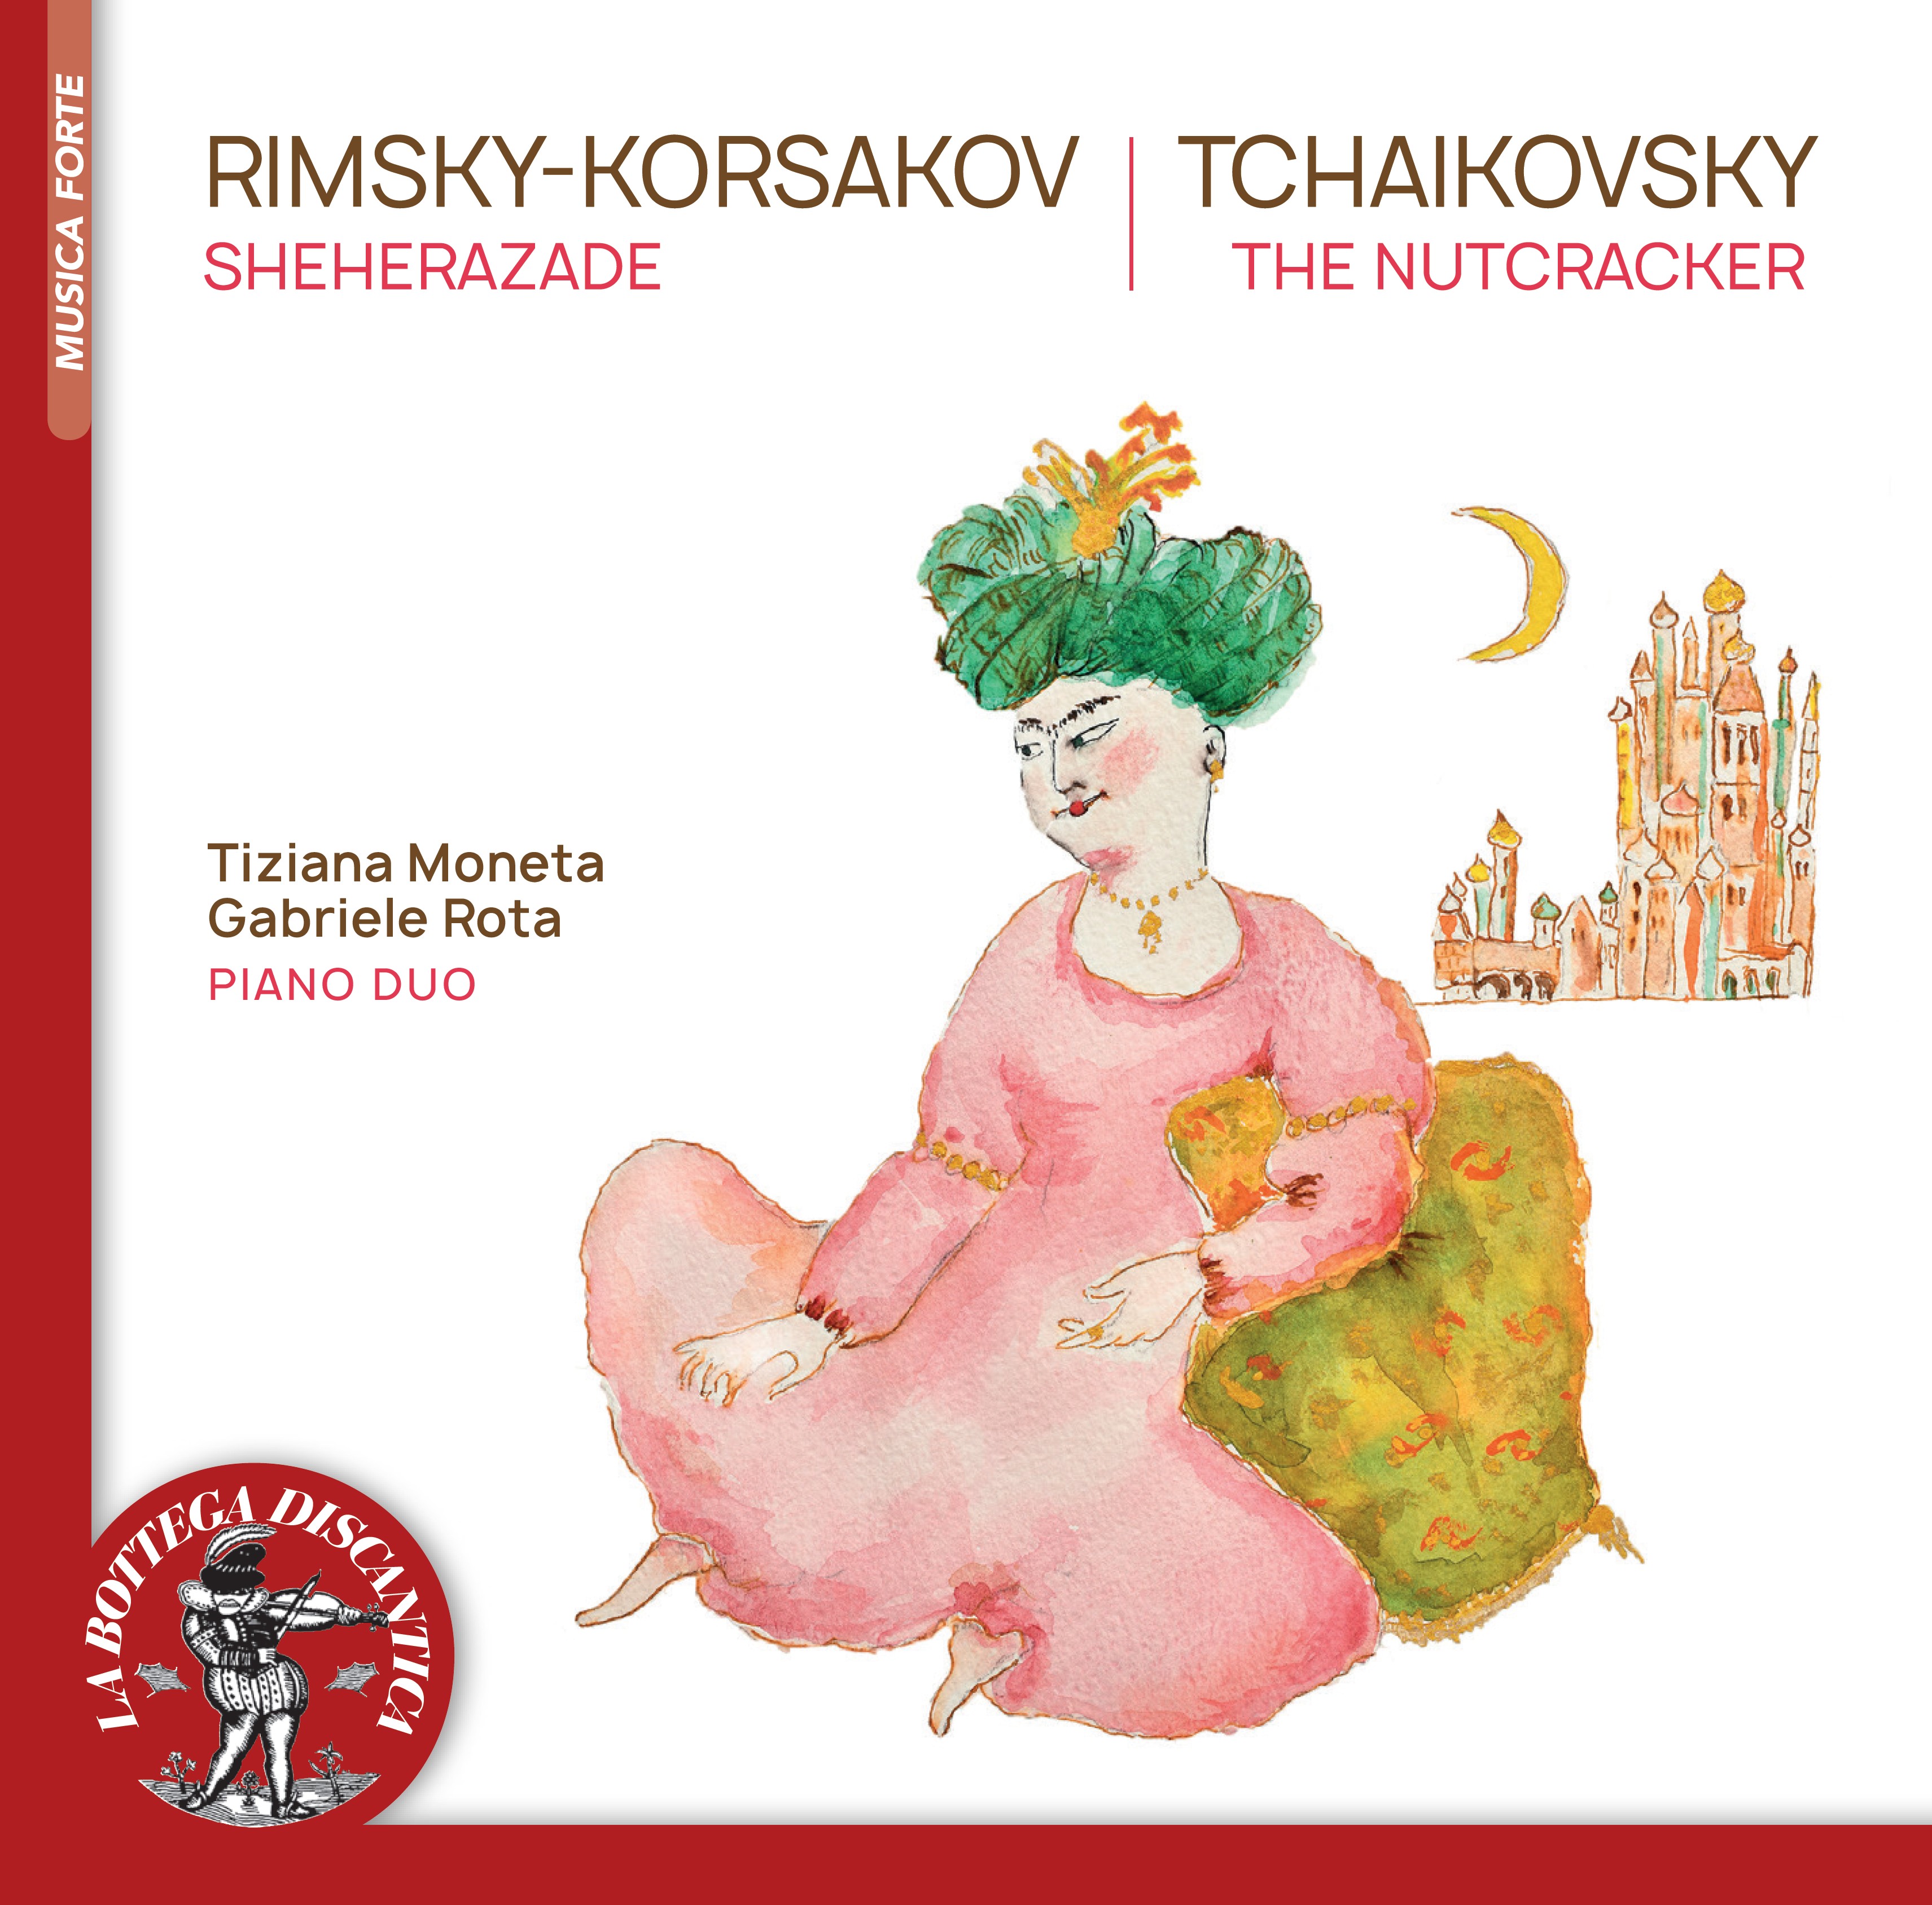 copertina cd russo